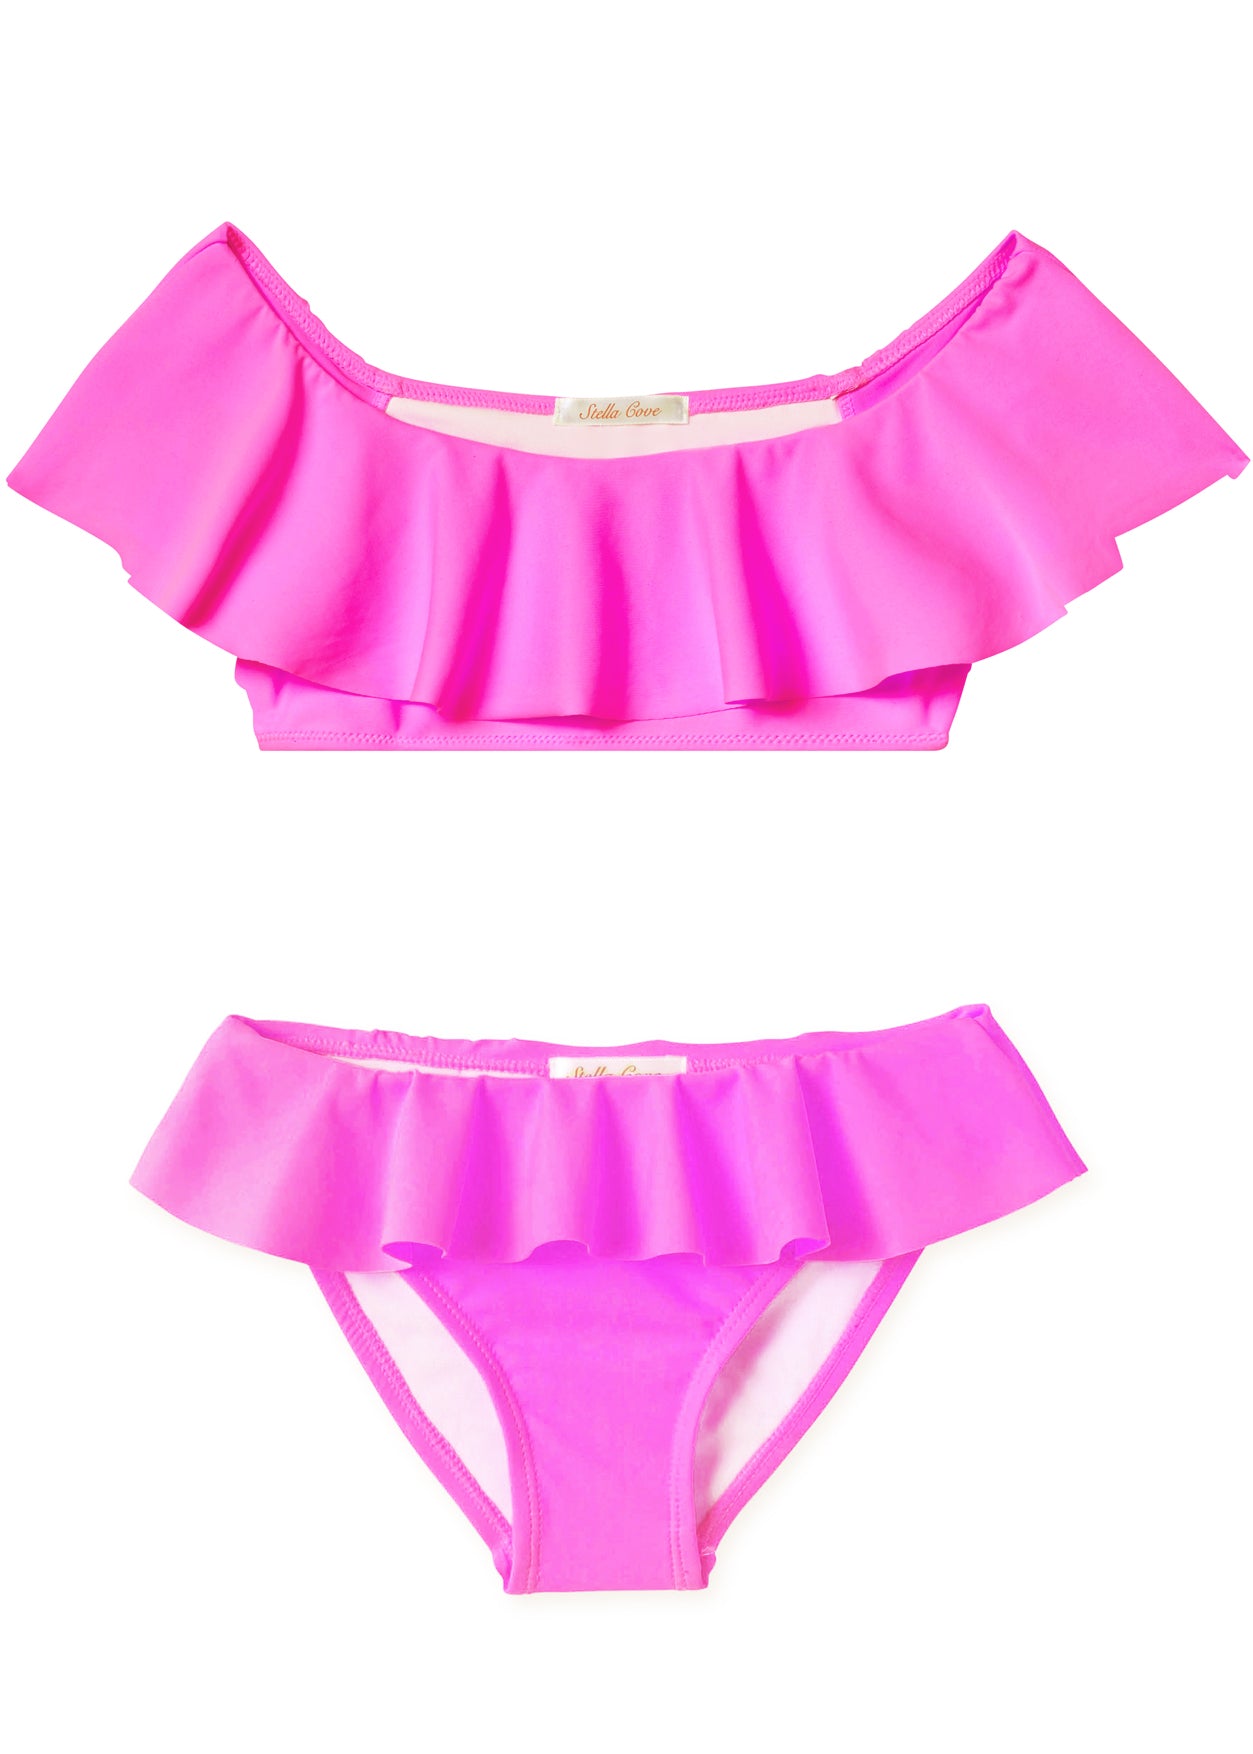 beachwear for girls, hot pink bikini for girls